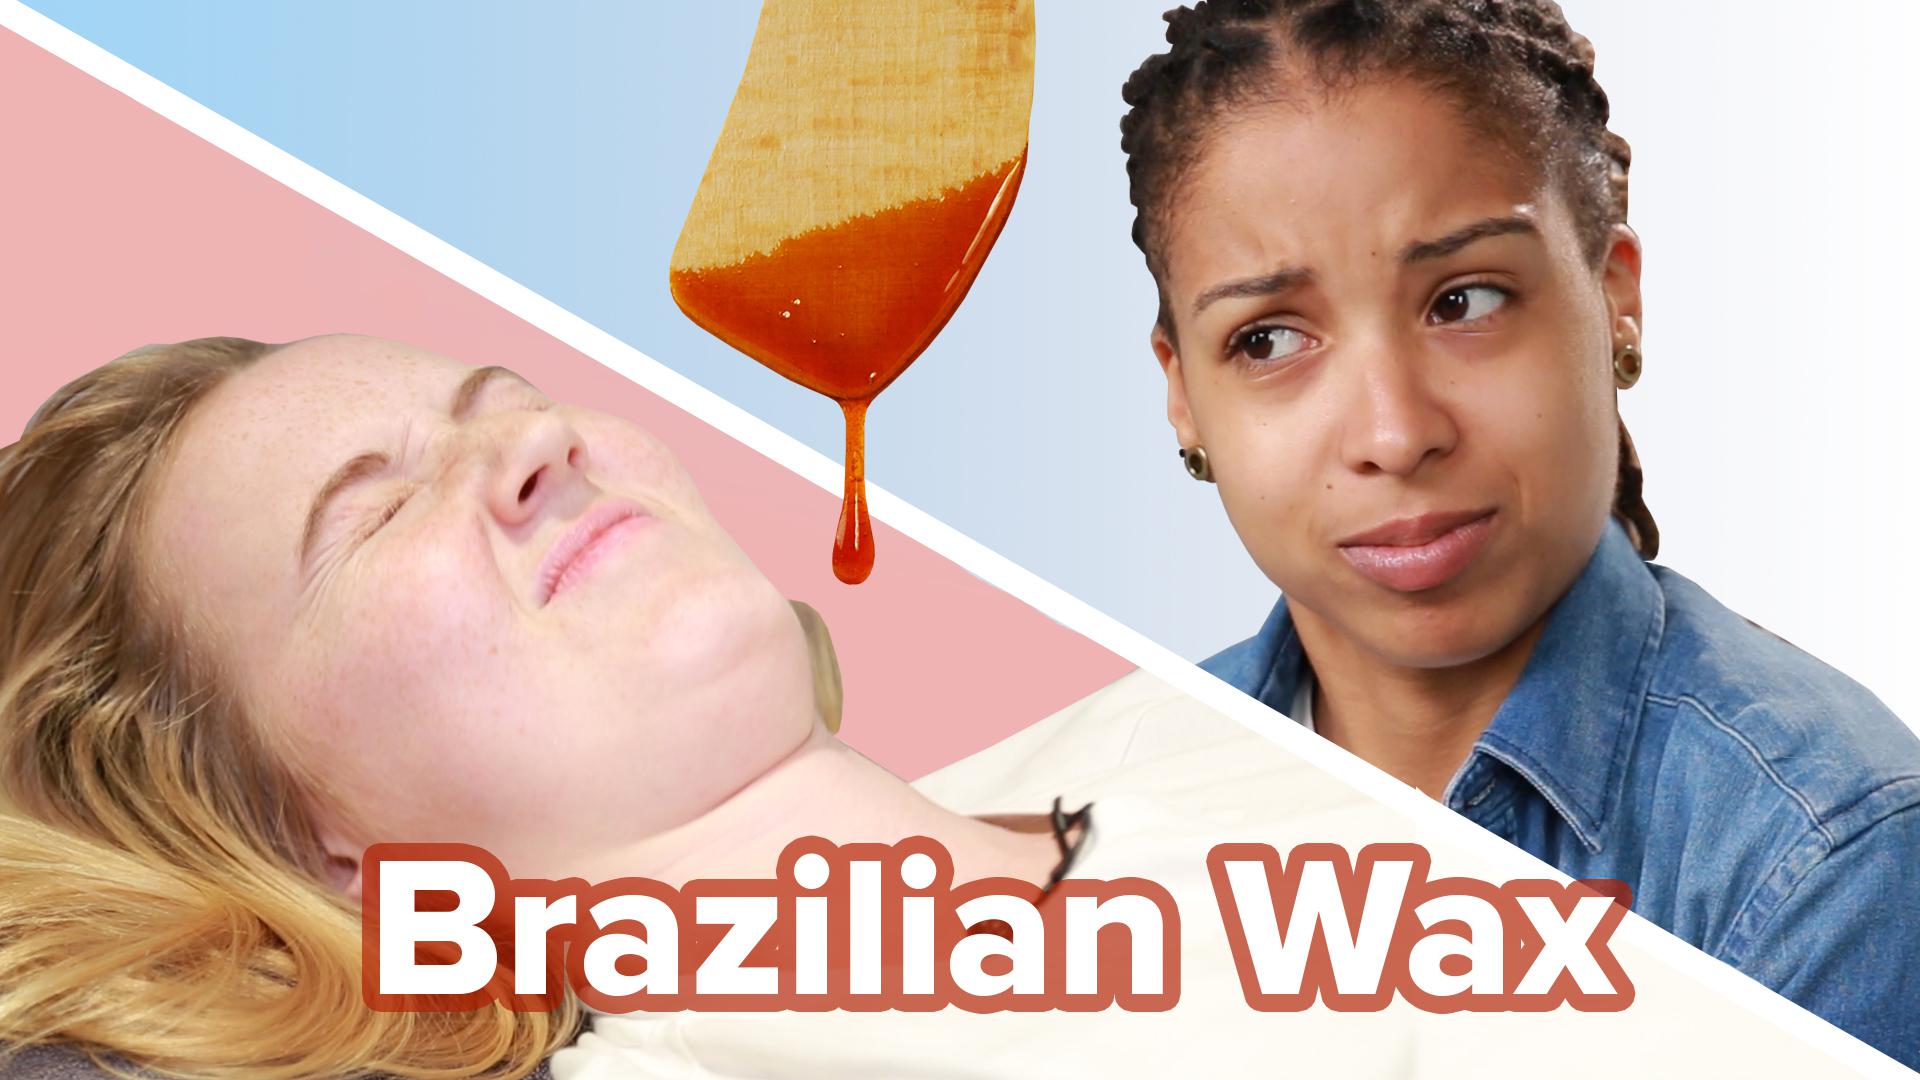 dora harris recommends mens brazilian waxing videos pic